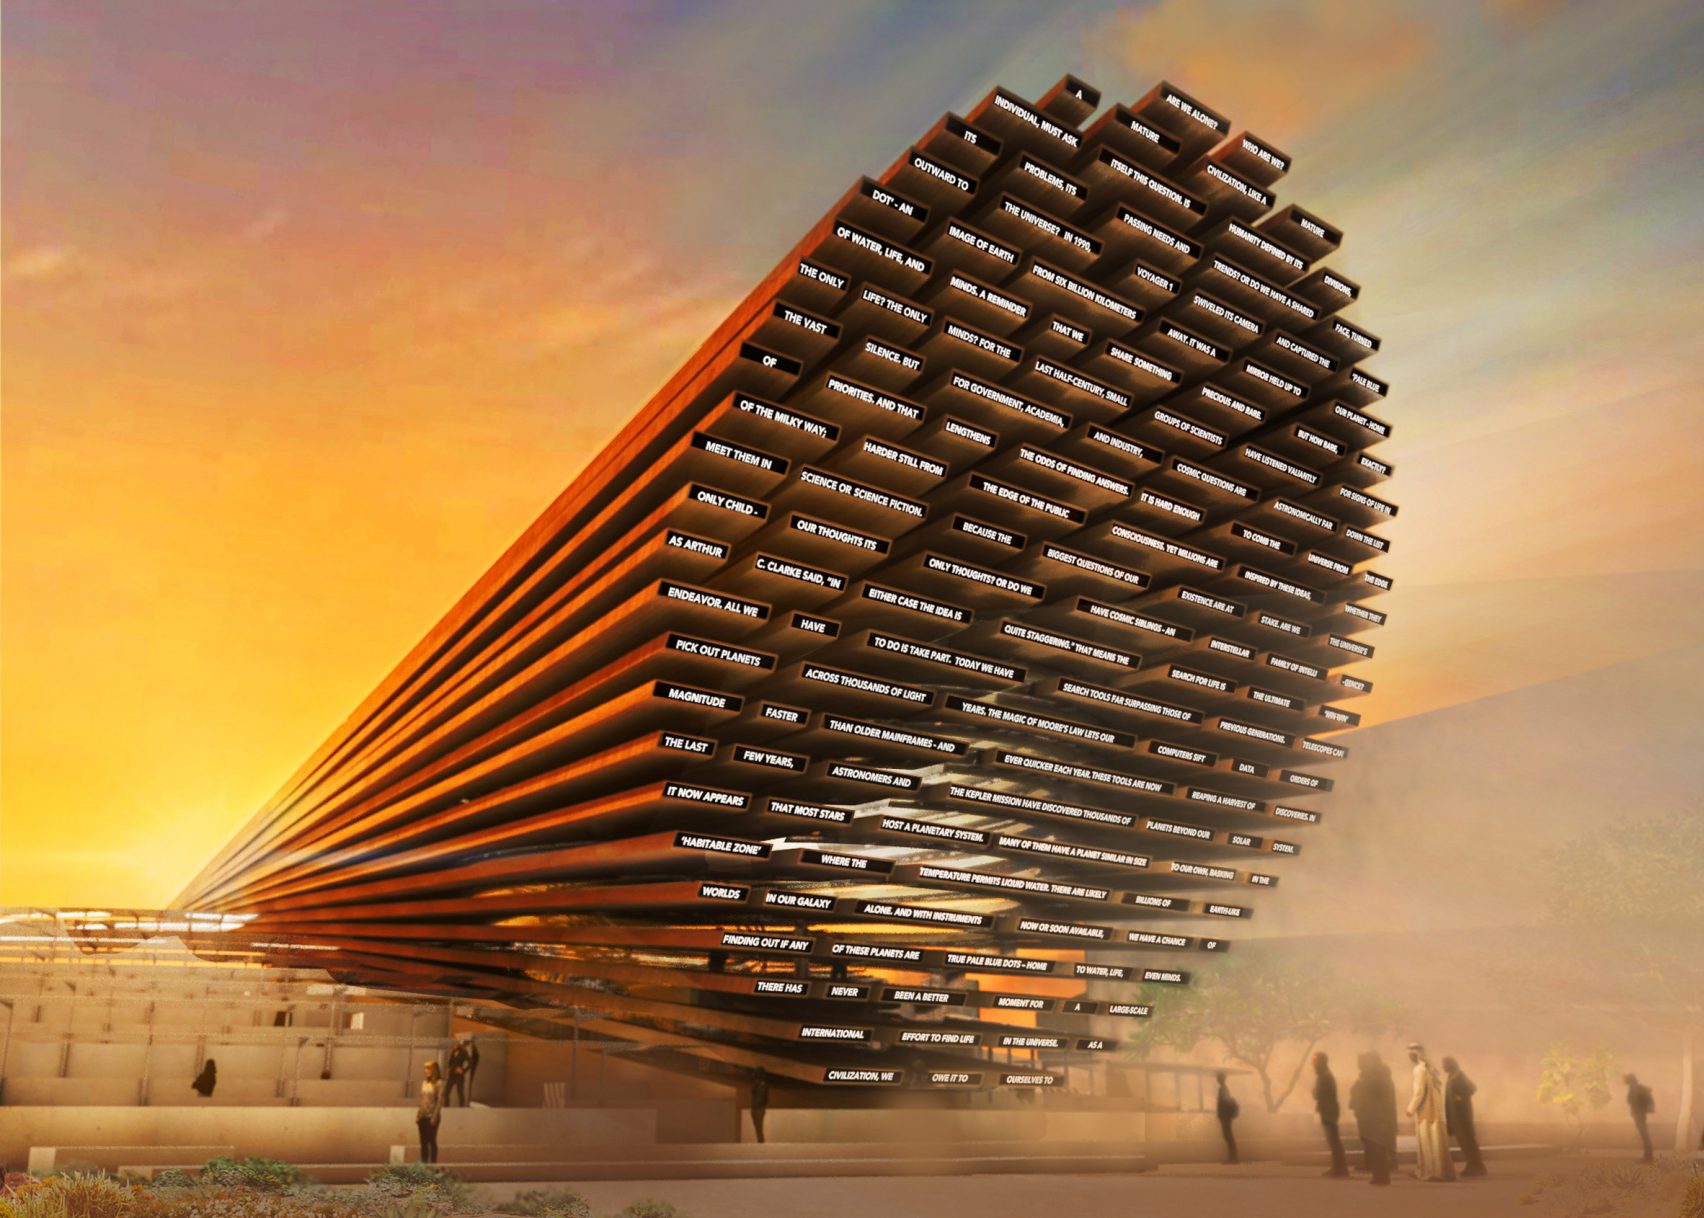 Es Devlin to design interactive Poem Pavilion for Dubai Expo 2020